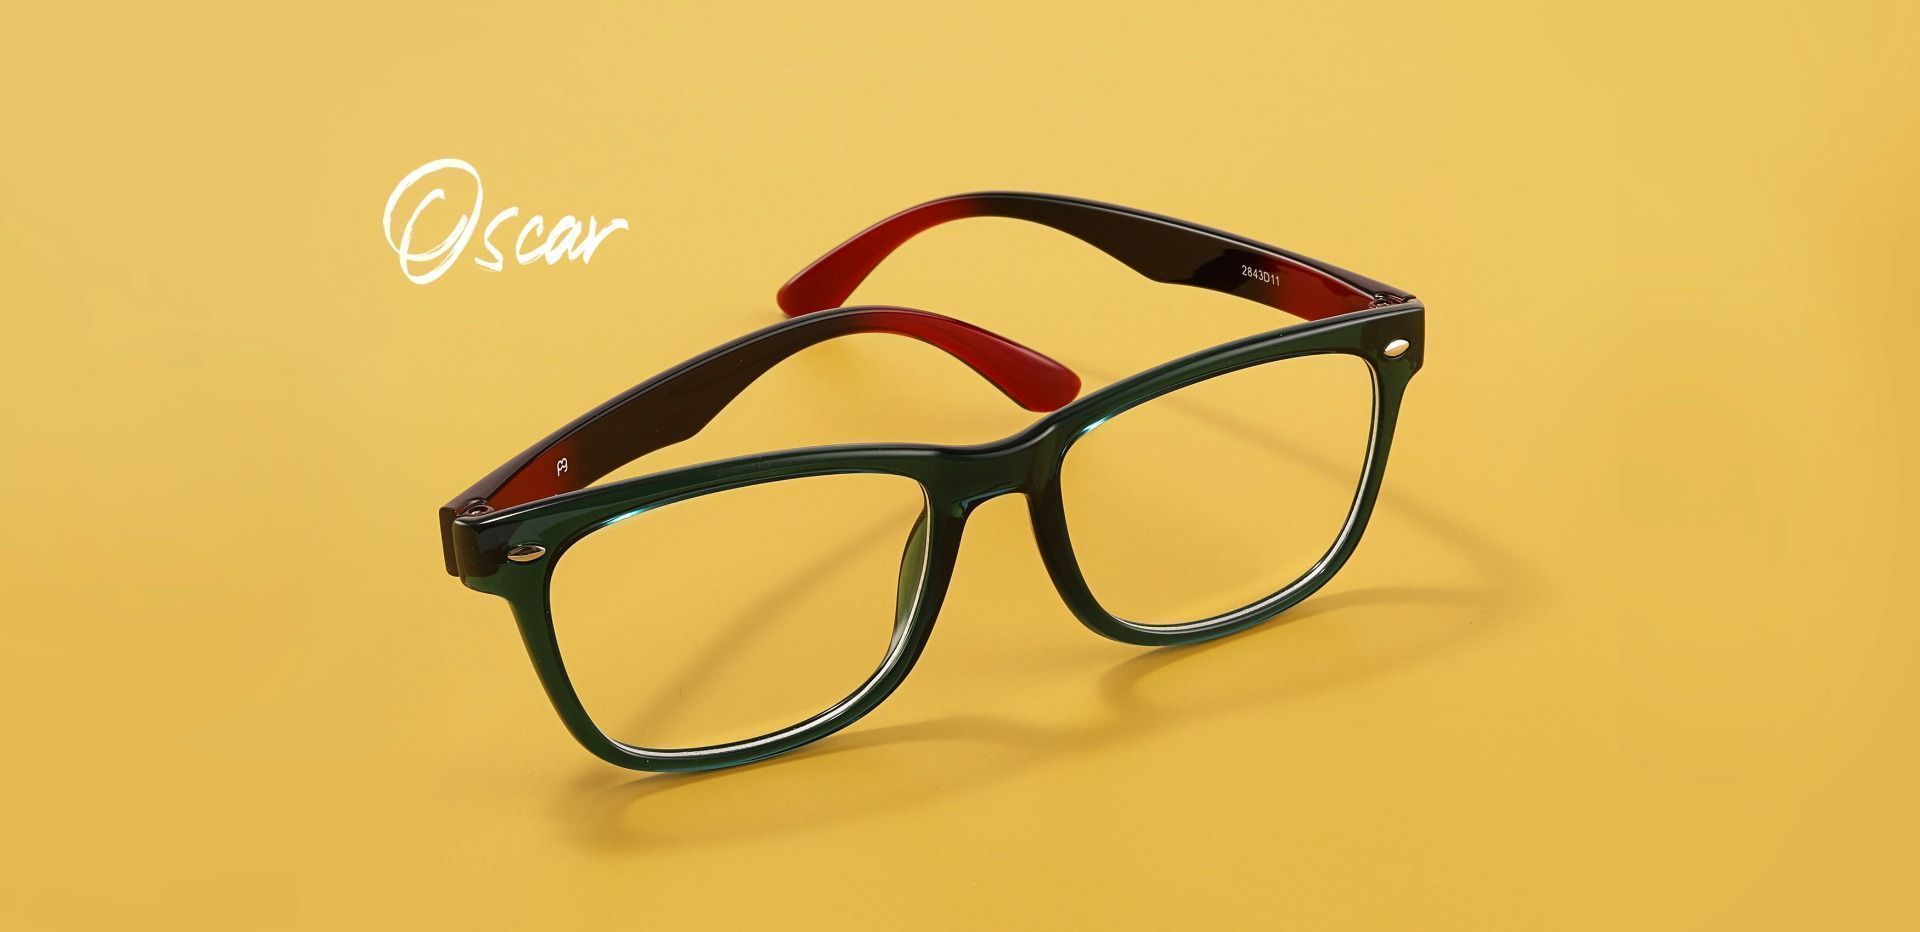 Oscar Rectangle Lined Bifocal Glasses - Green